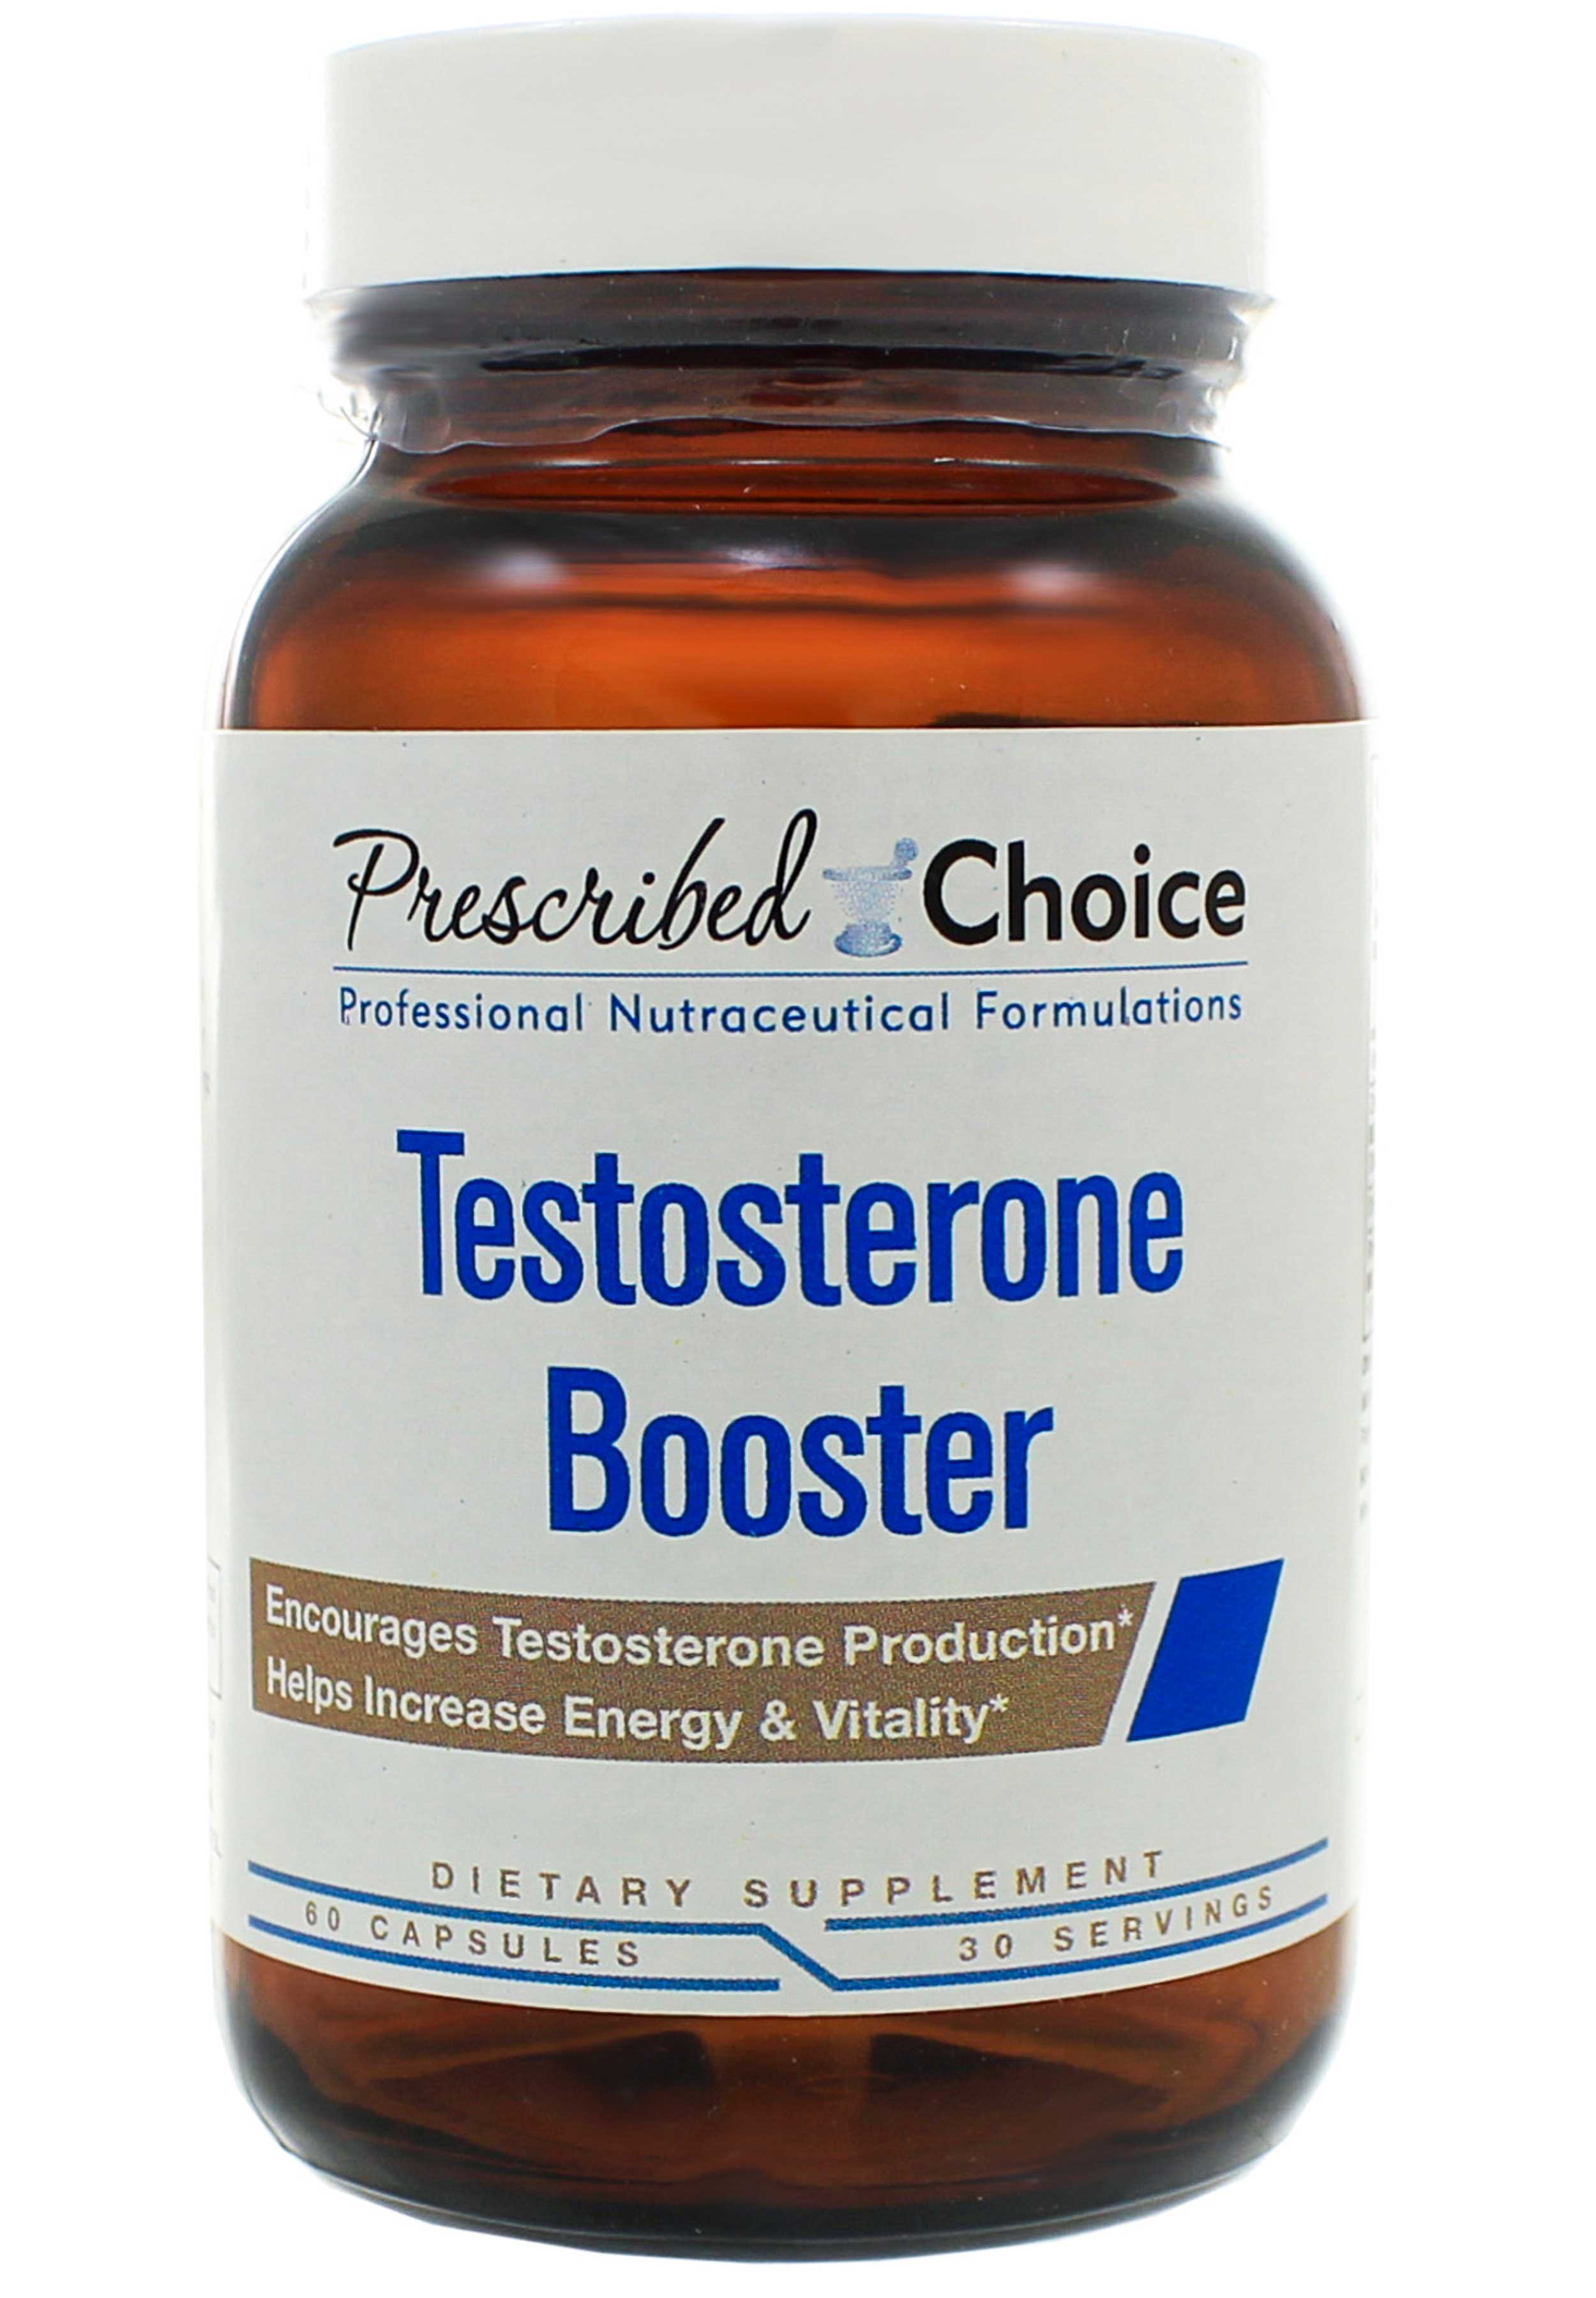 Prescribed Choice Testosterone Booster